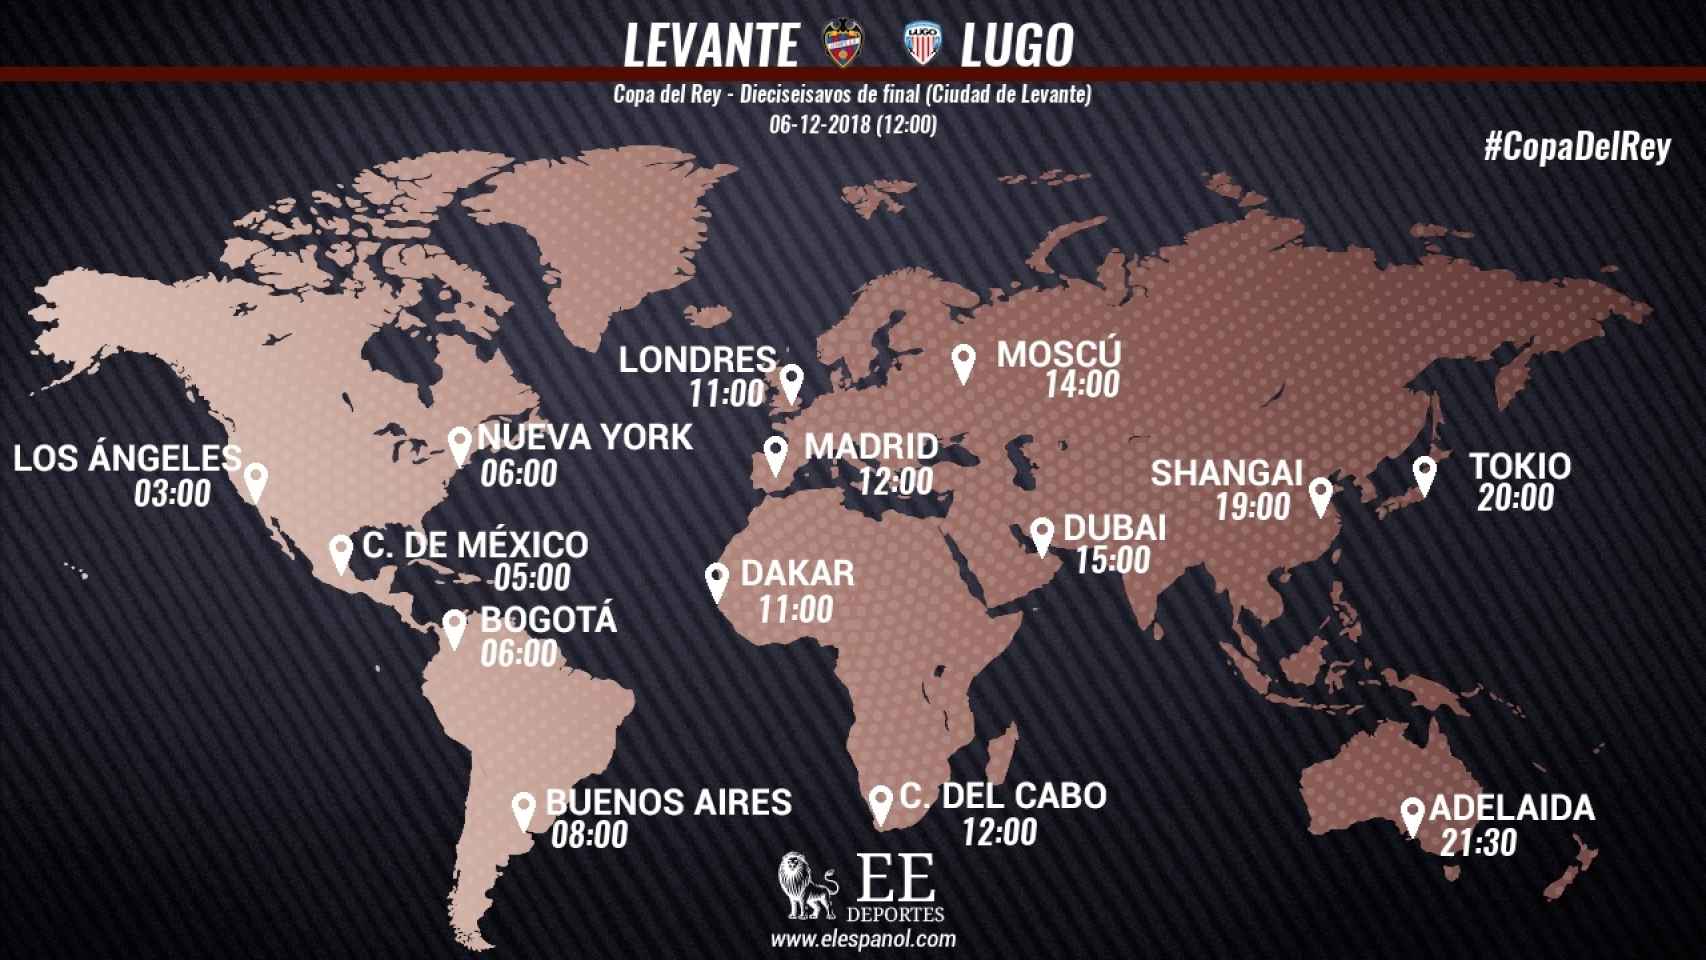 Horario Levante - Lugo